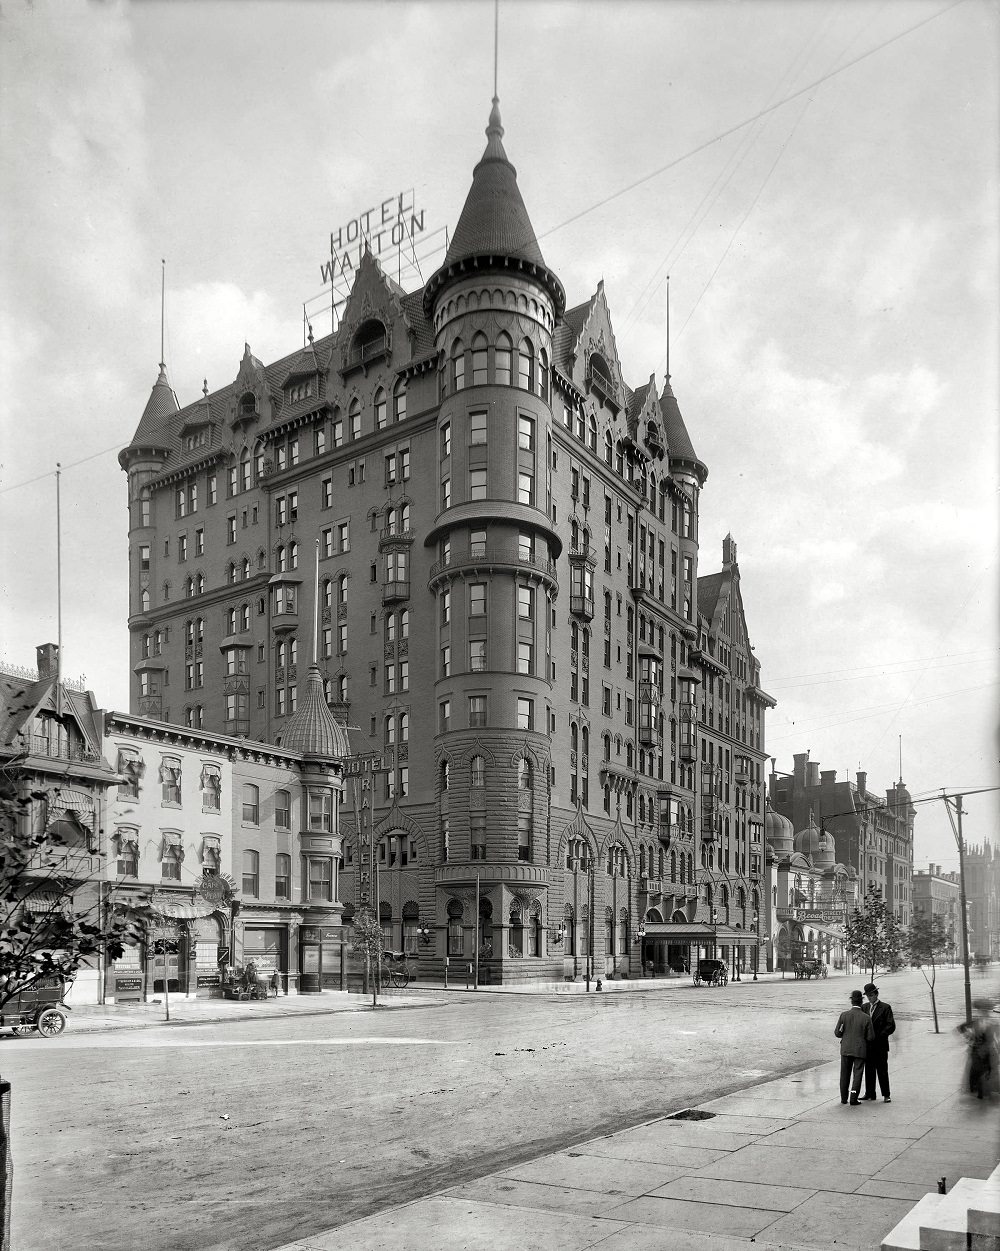 Hotel Walton, Broad Street, Philadelphia circa 1908